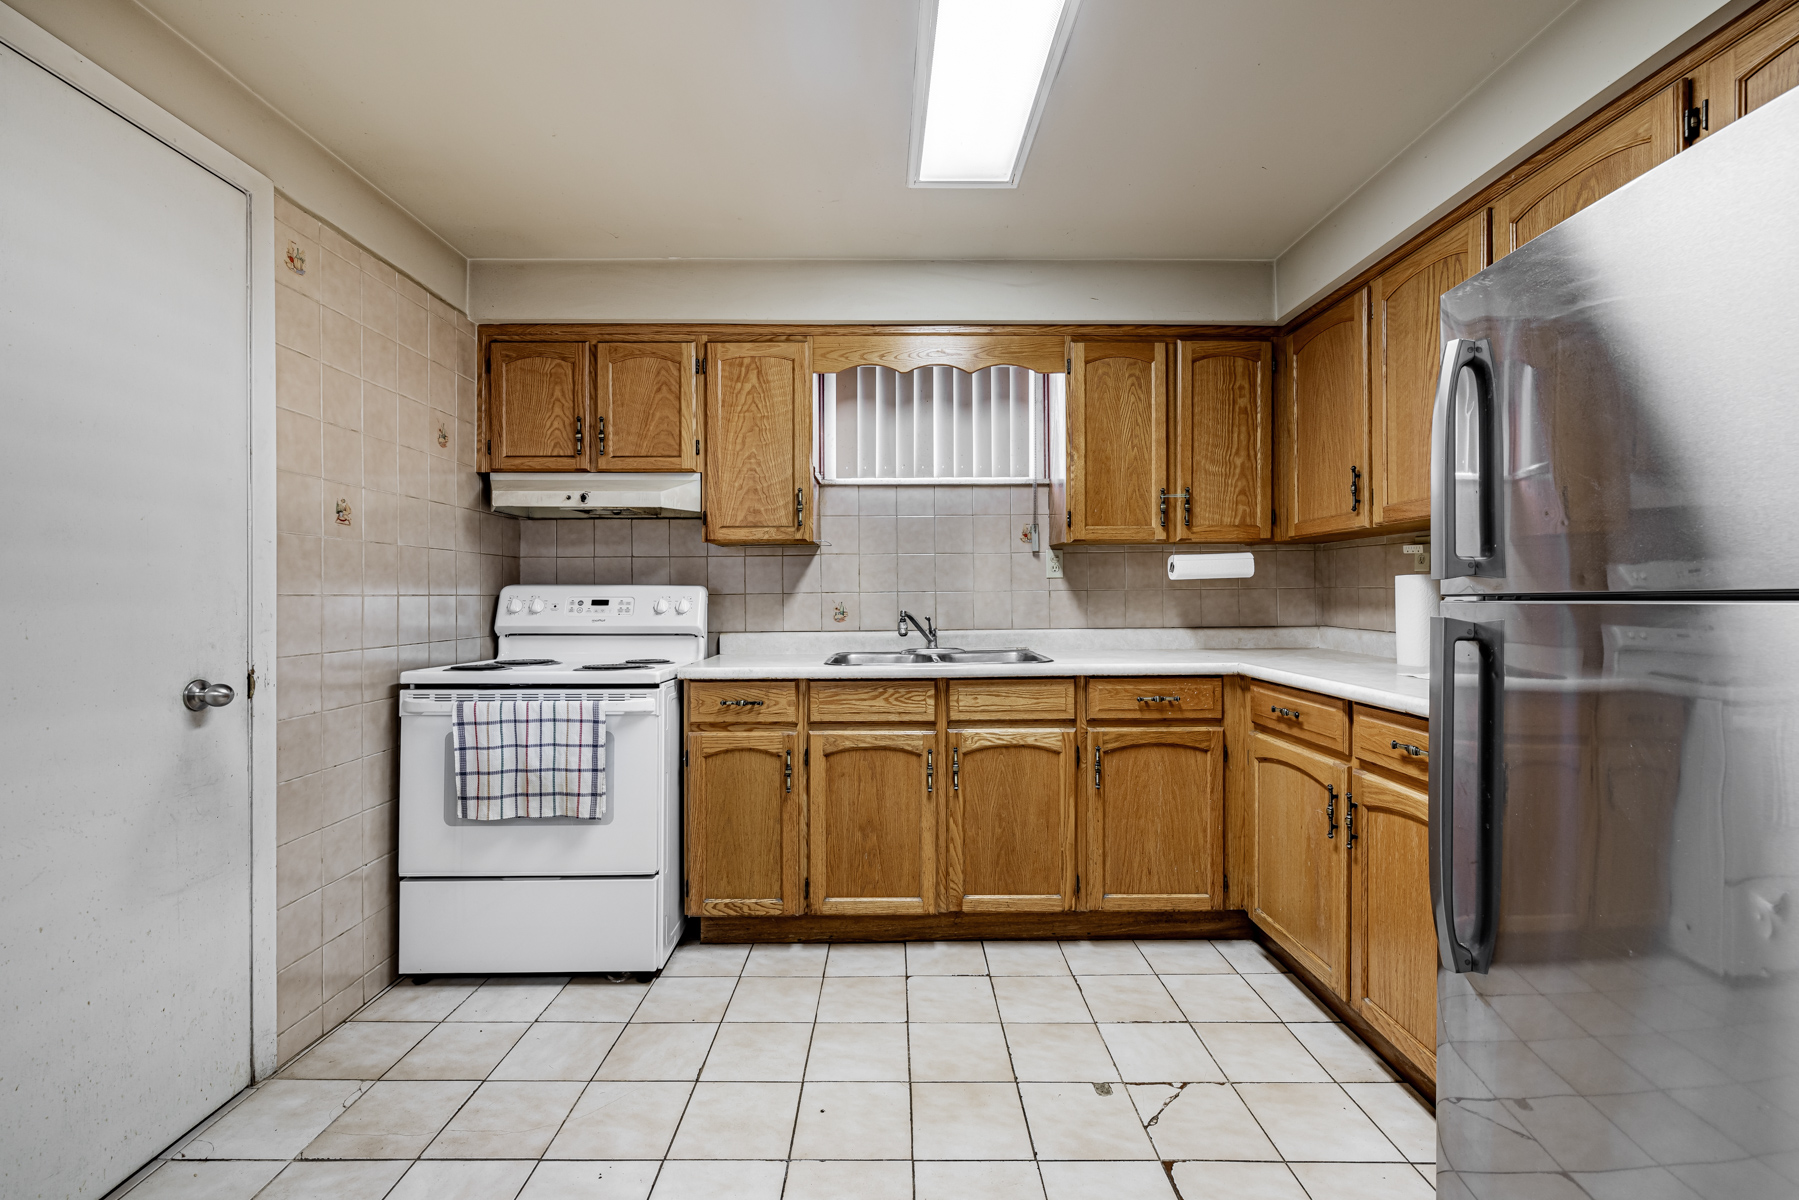 Basement kitchen with many cabinets, ceramic floors, tiled back-splash, fluorescent lighting and appliances.